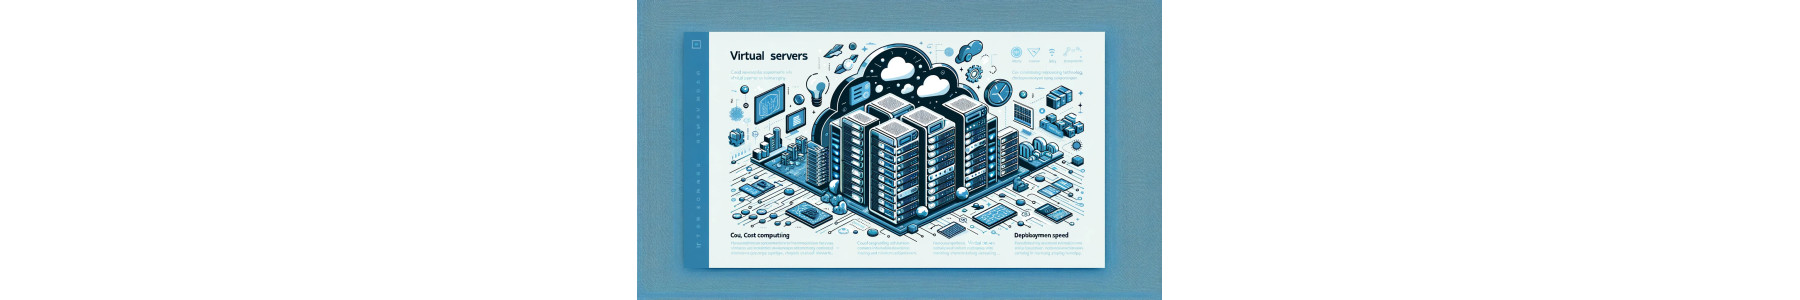 Server Virtuali Flessibili e Scalabili | Webbin24.com